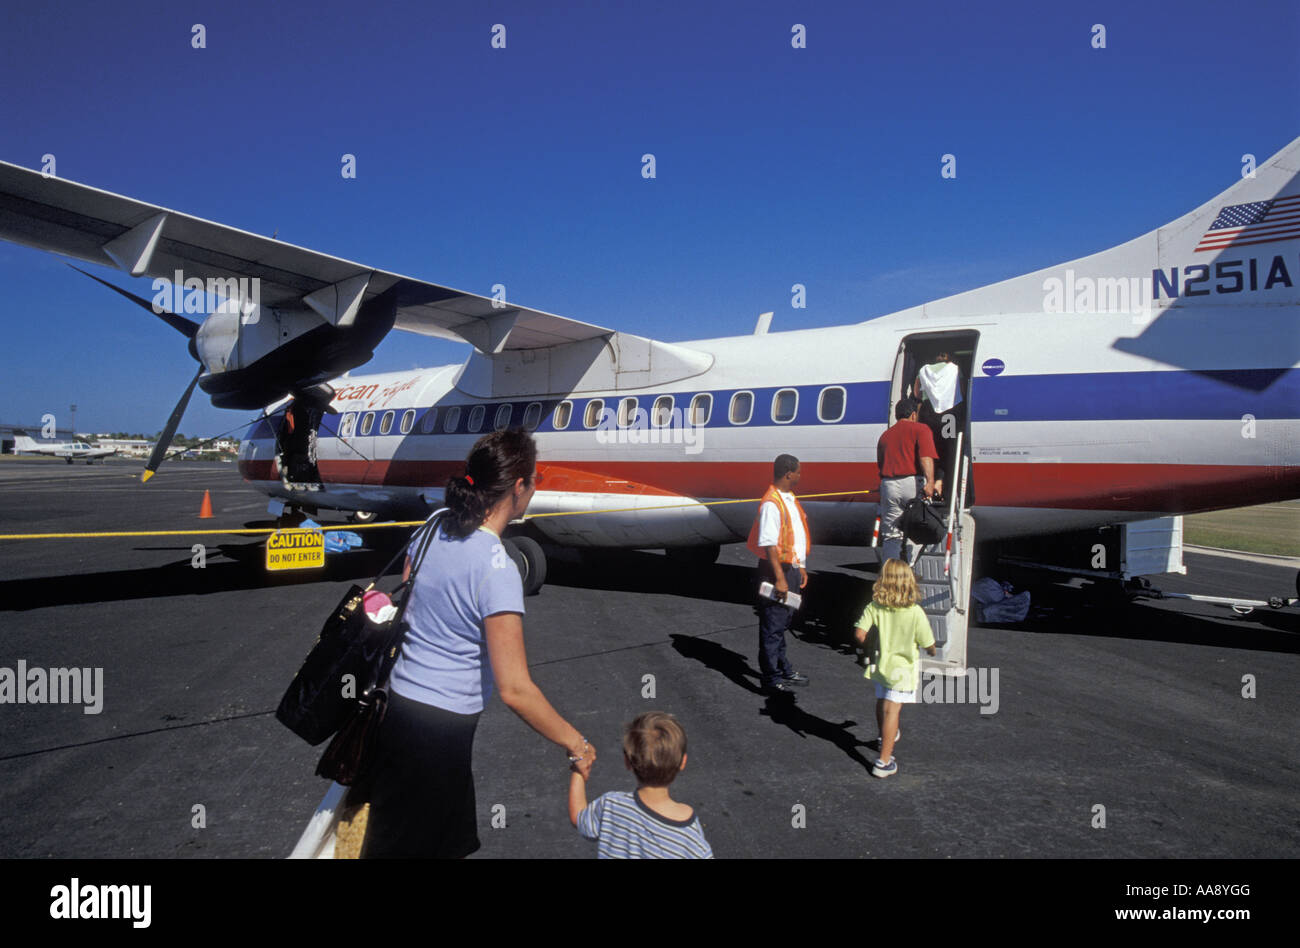 American Eagle commuter plane loading passengers single parent with children Stock Photo